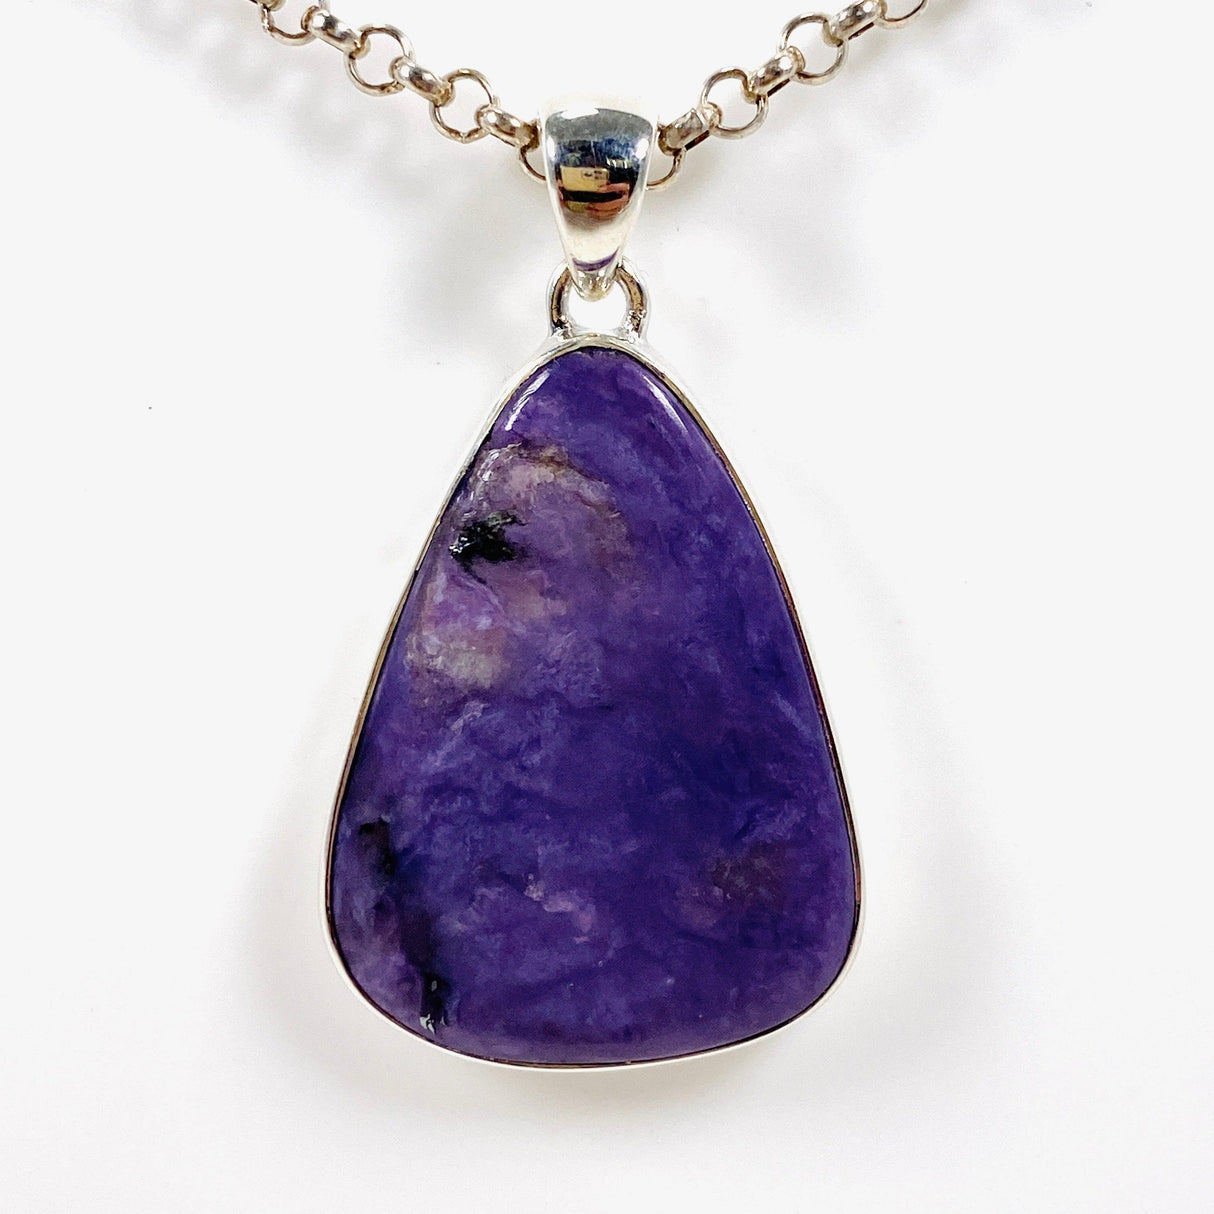 Purple Charoite tear drop pendant in sterling silver on a chain